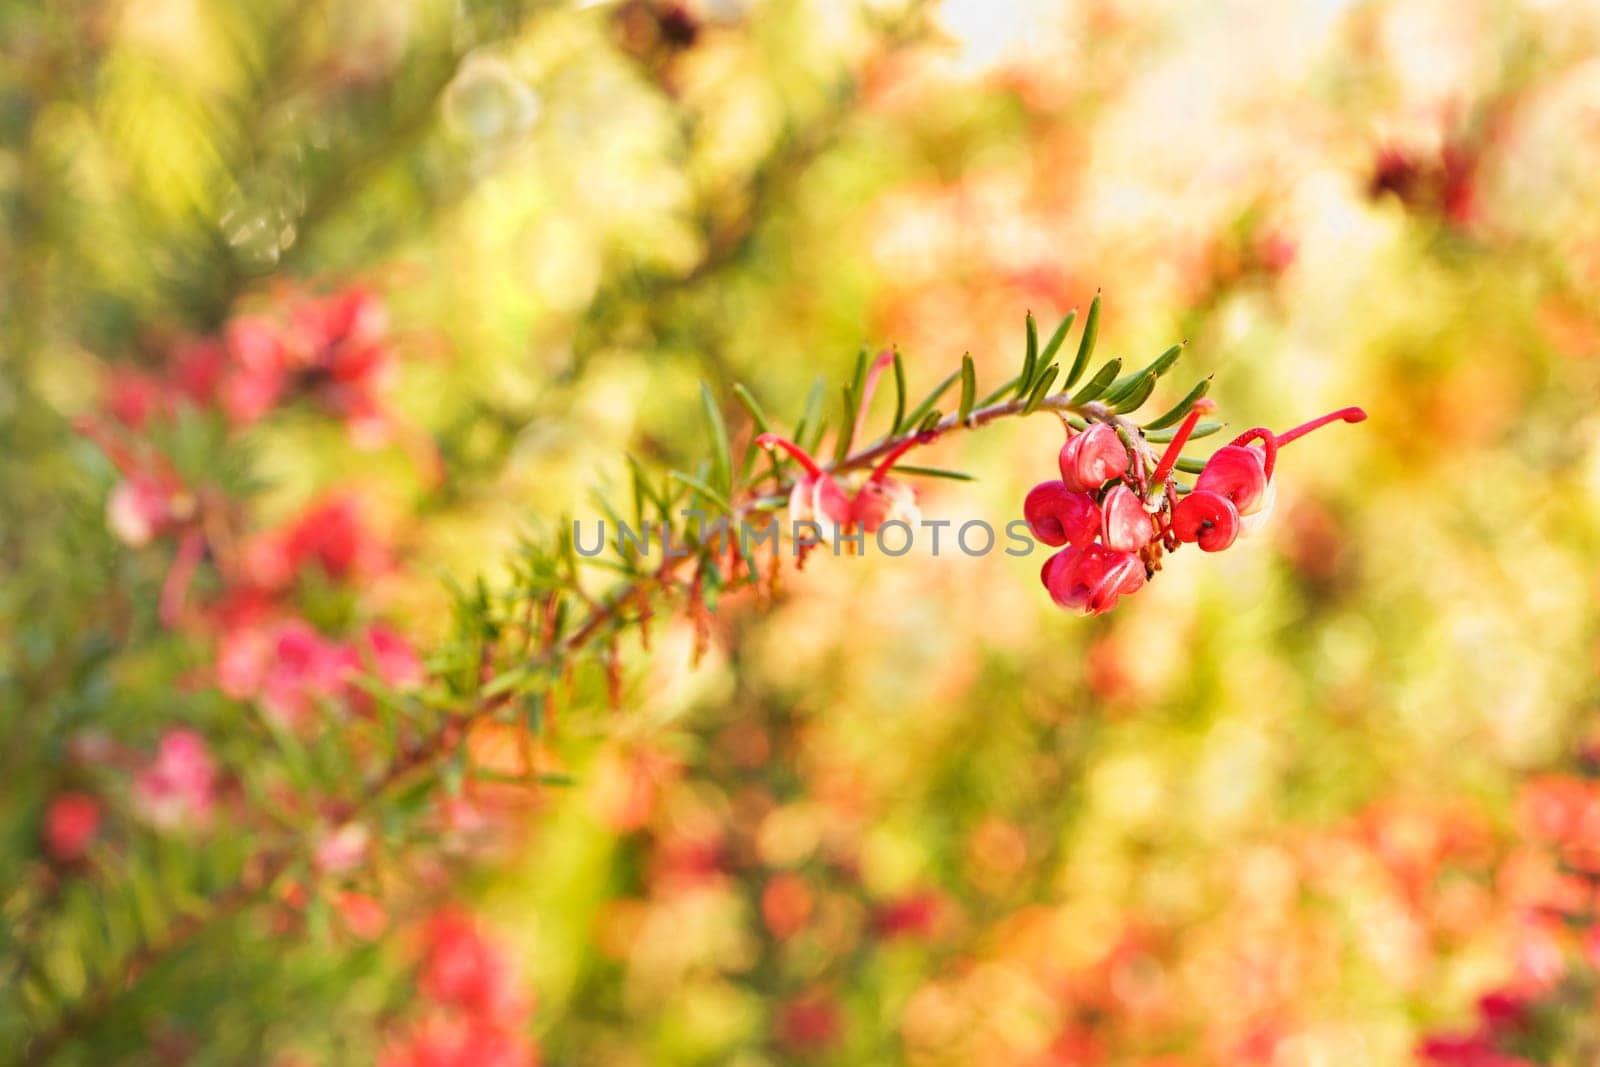 Flowering plant of rosemary grevillea , grevillea rosmarinifolia ,shrub with red flowers